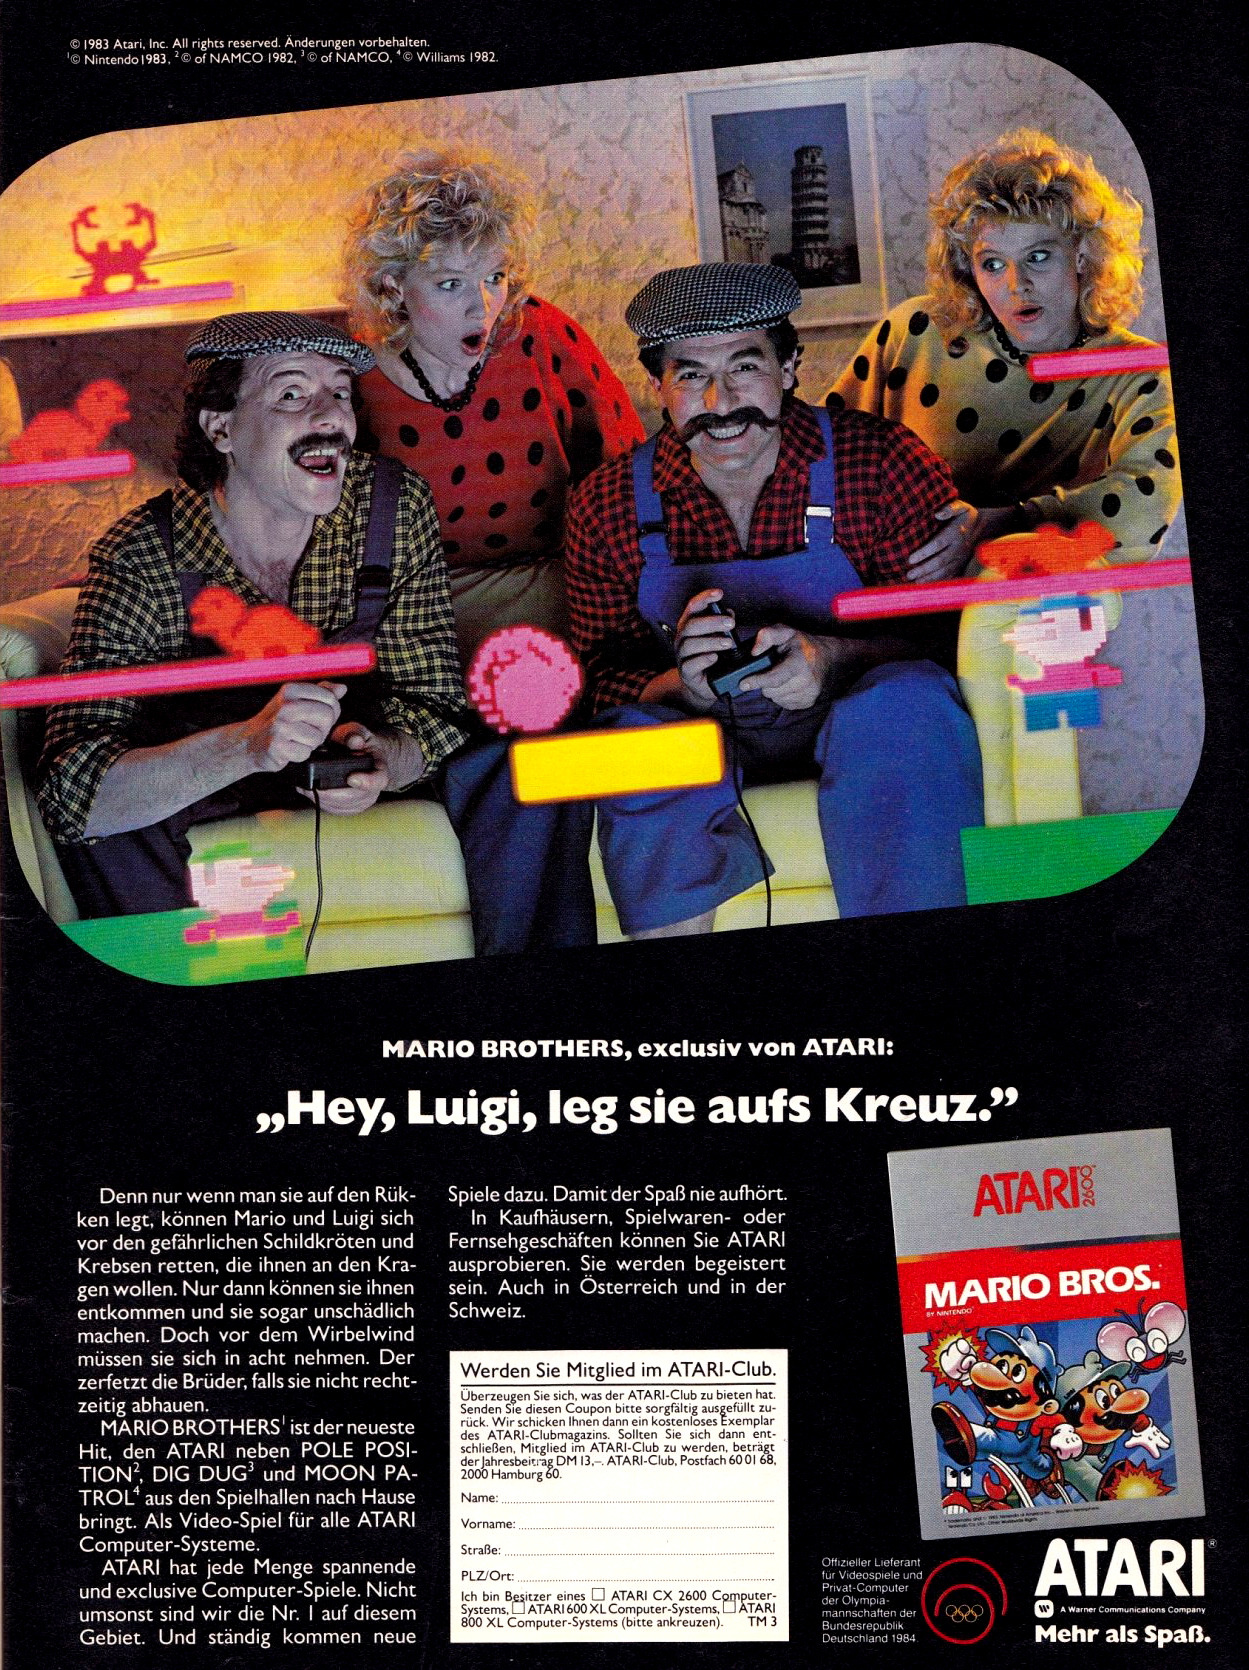 “ Ad for the Atari 2600 version of Mario Bros.
”